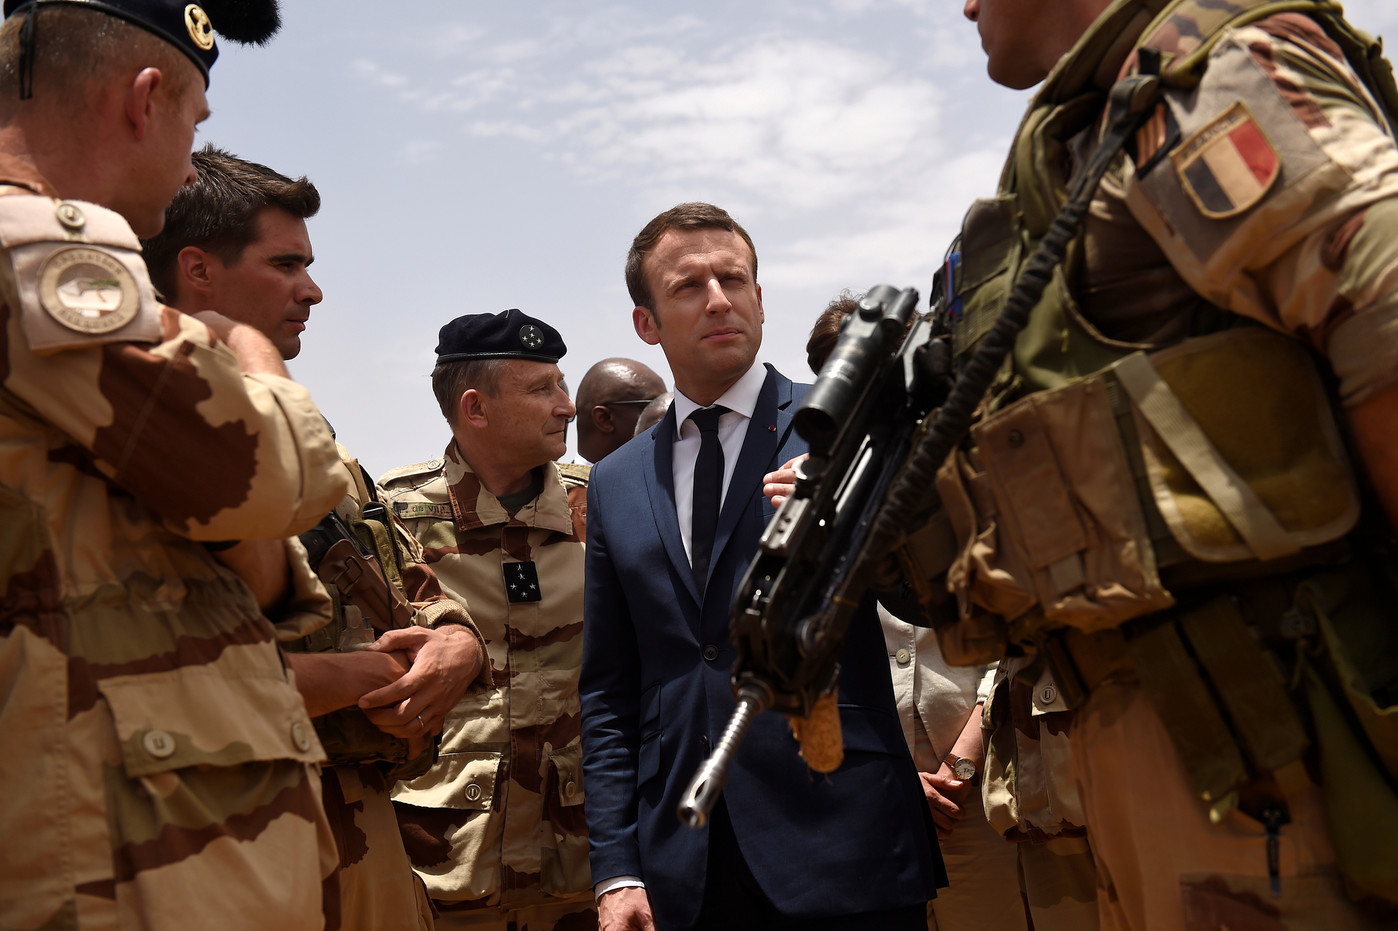 Mali : Macron annonce "la fin de l’opération Barkhane"